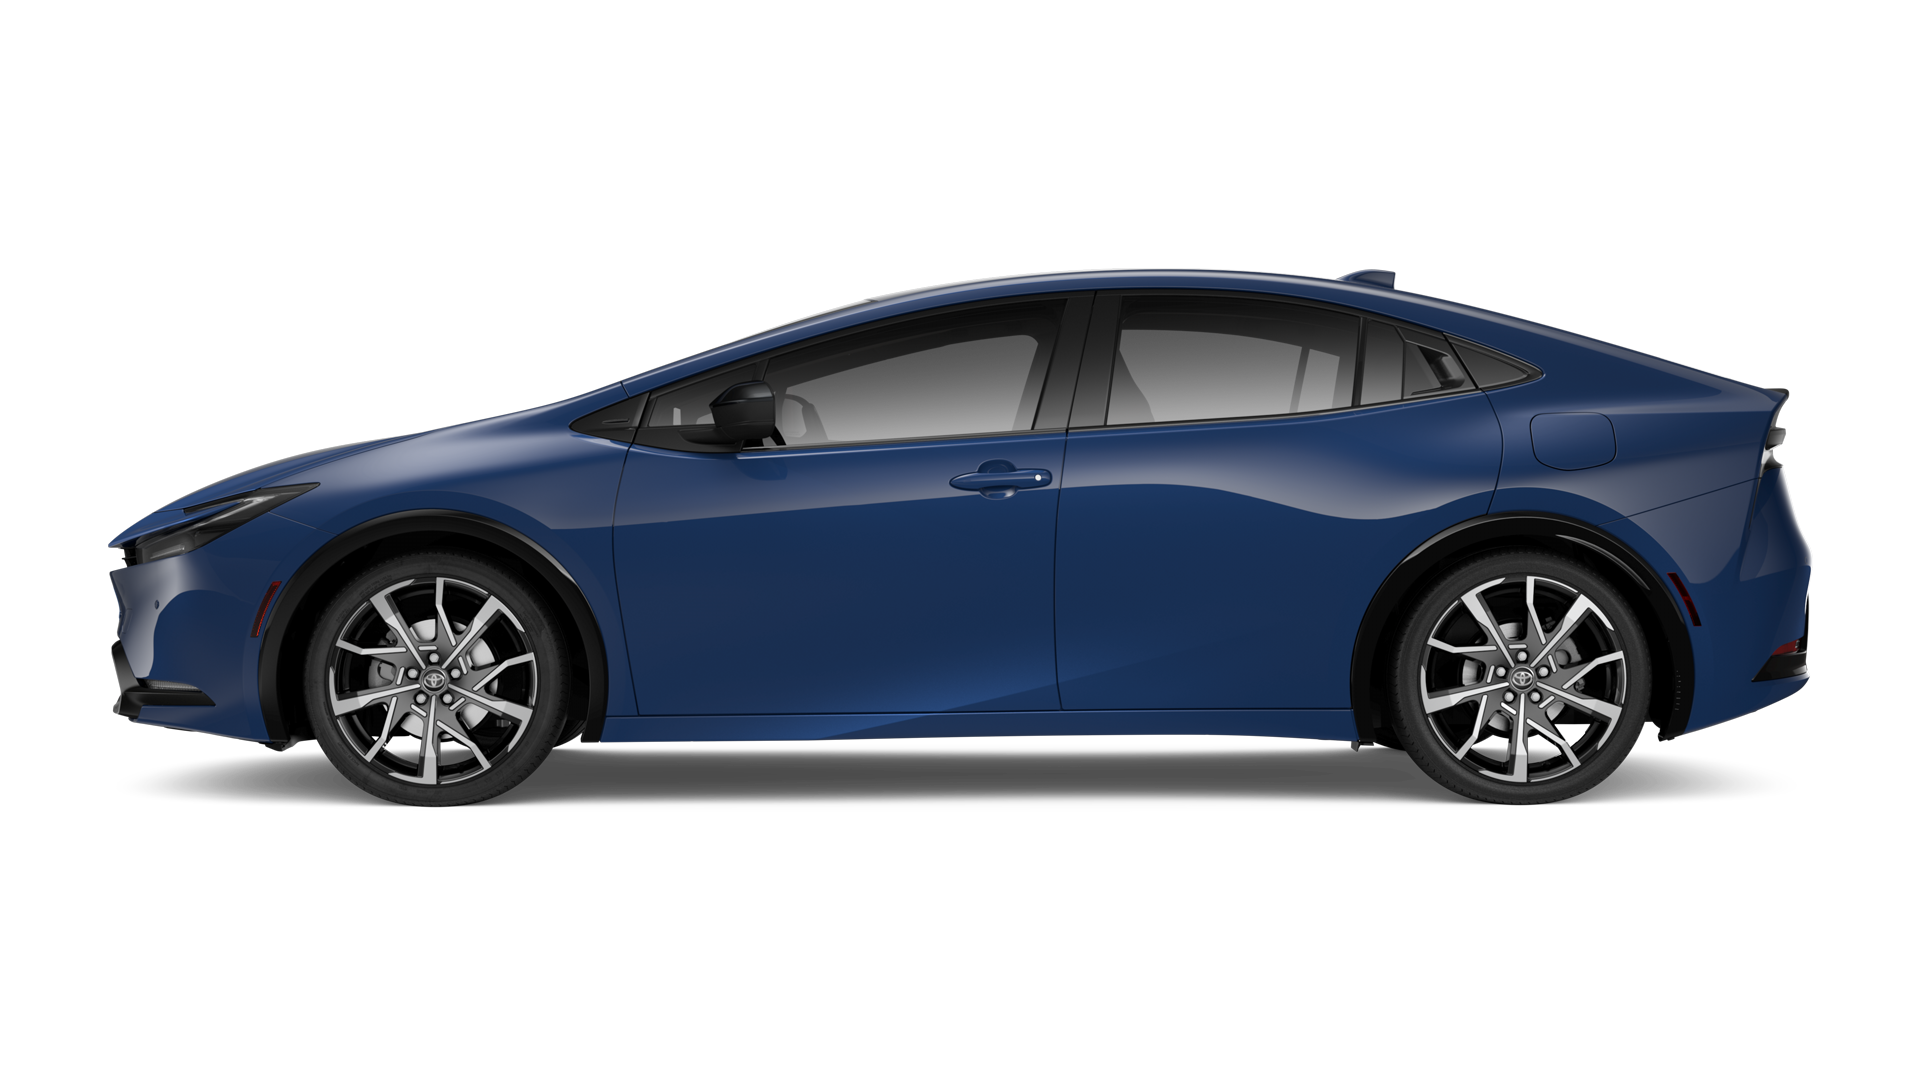 2024 Toyota Prime in Reservoir Blue.